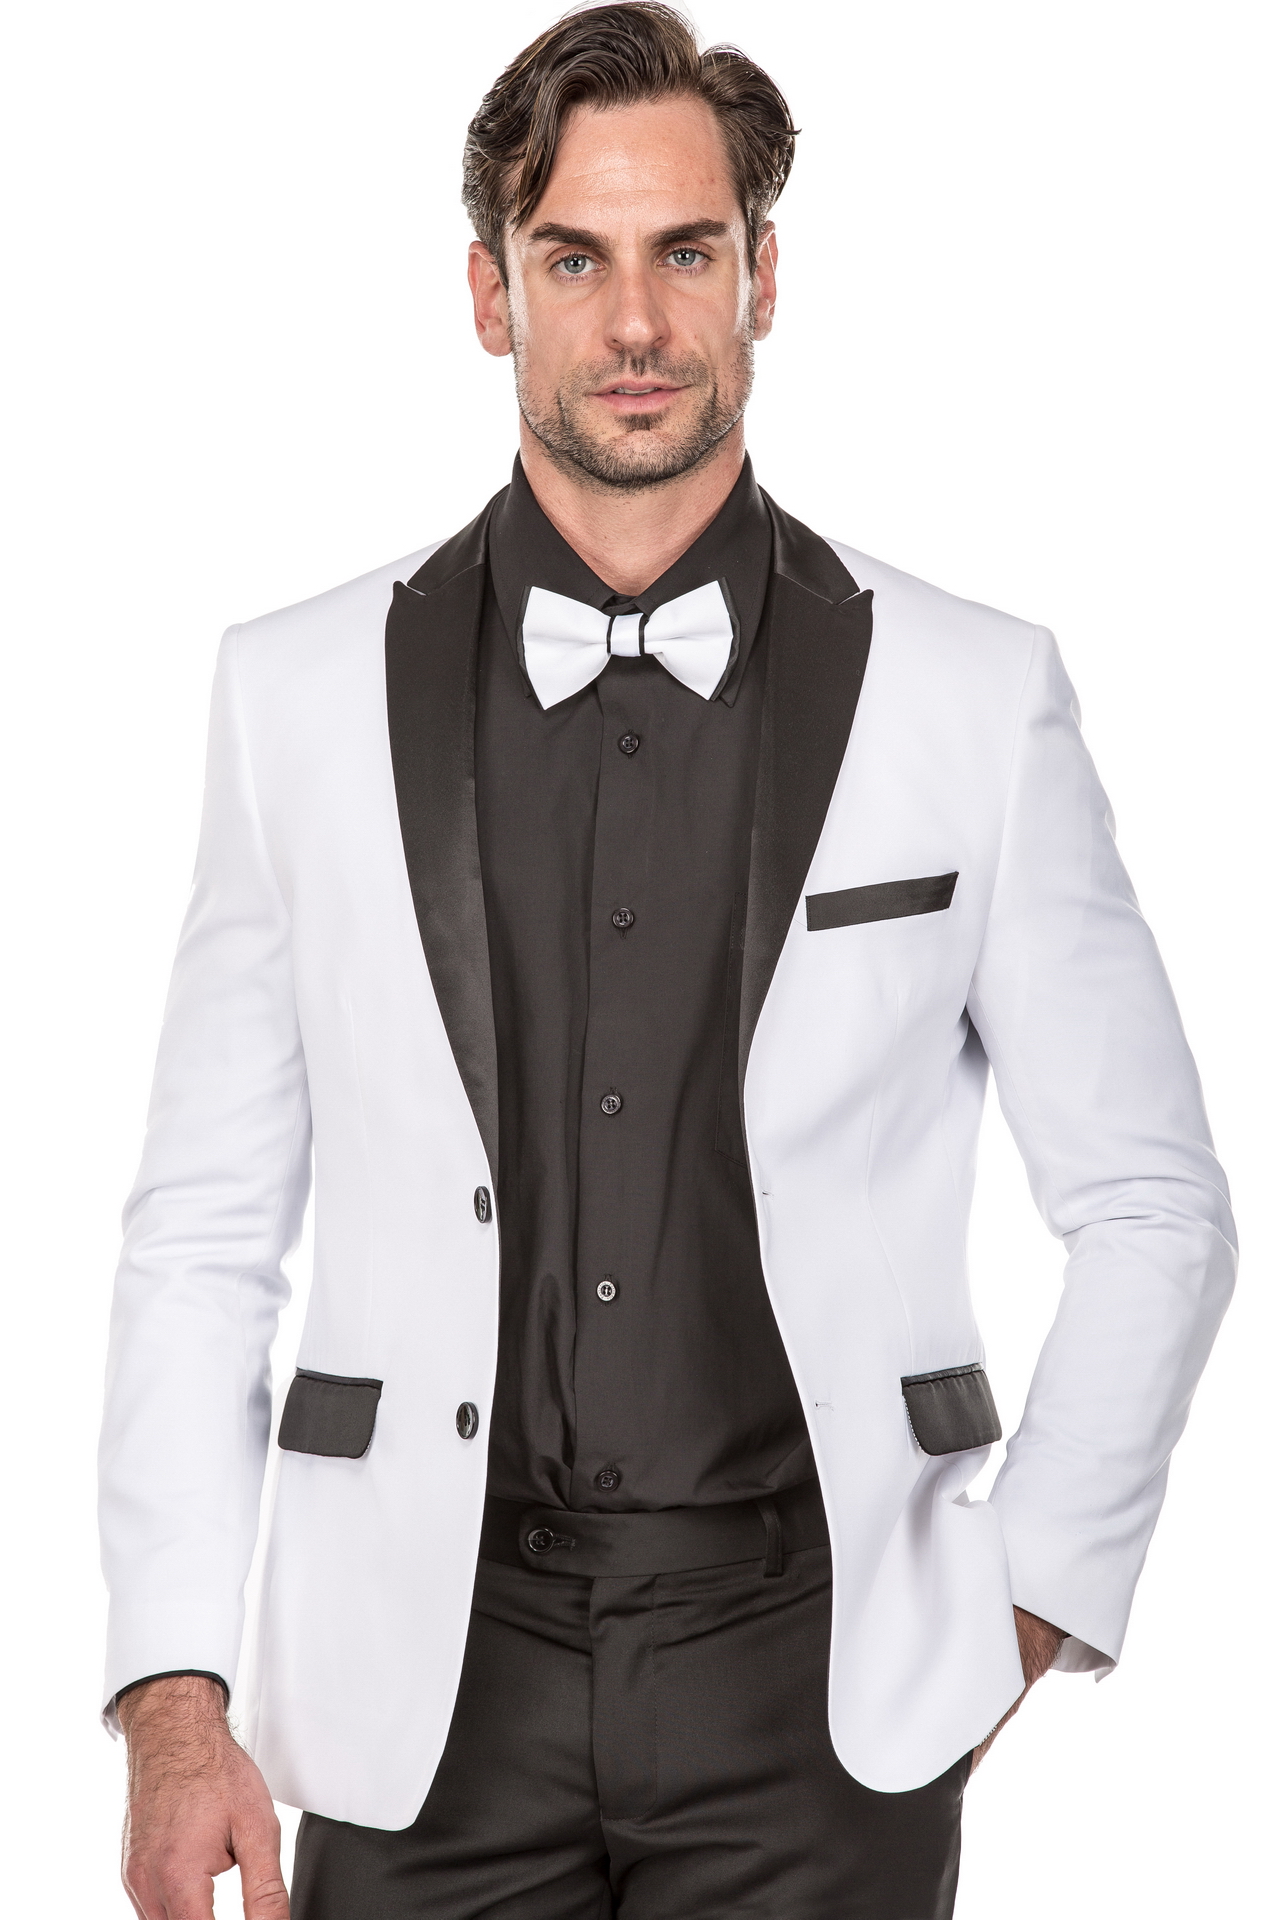 Mens white suit, White tuxedo jacket, Wedding suits men